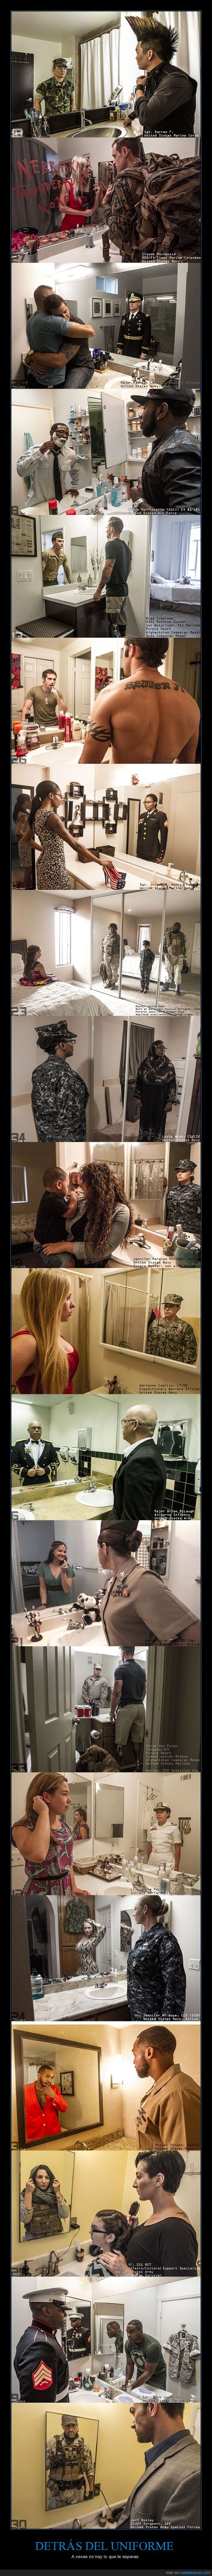 soldado,guerra,ropa,calle,familia,militar,traje,fotografia,espejo,Devin Mitchell